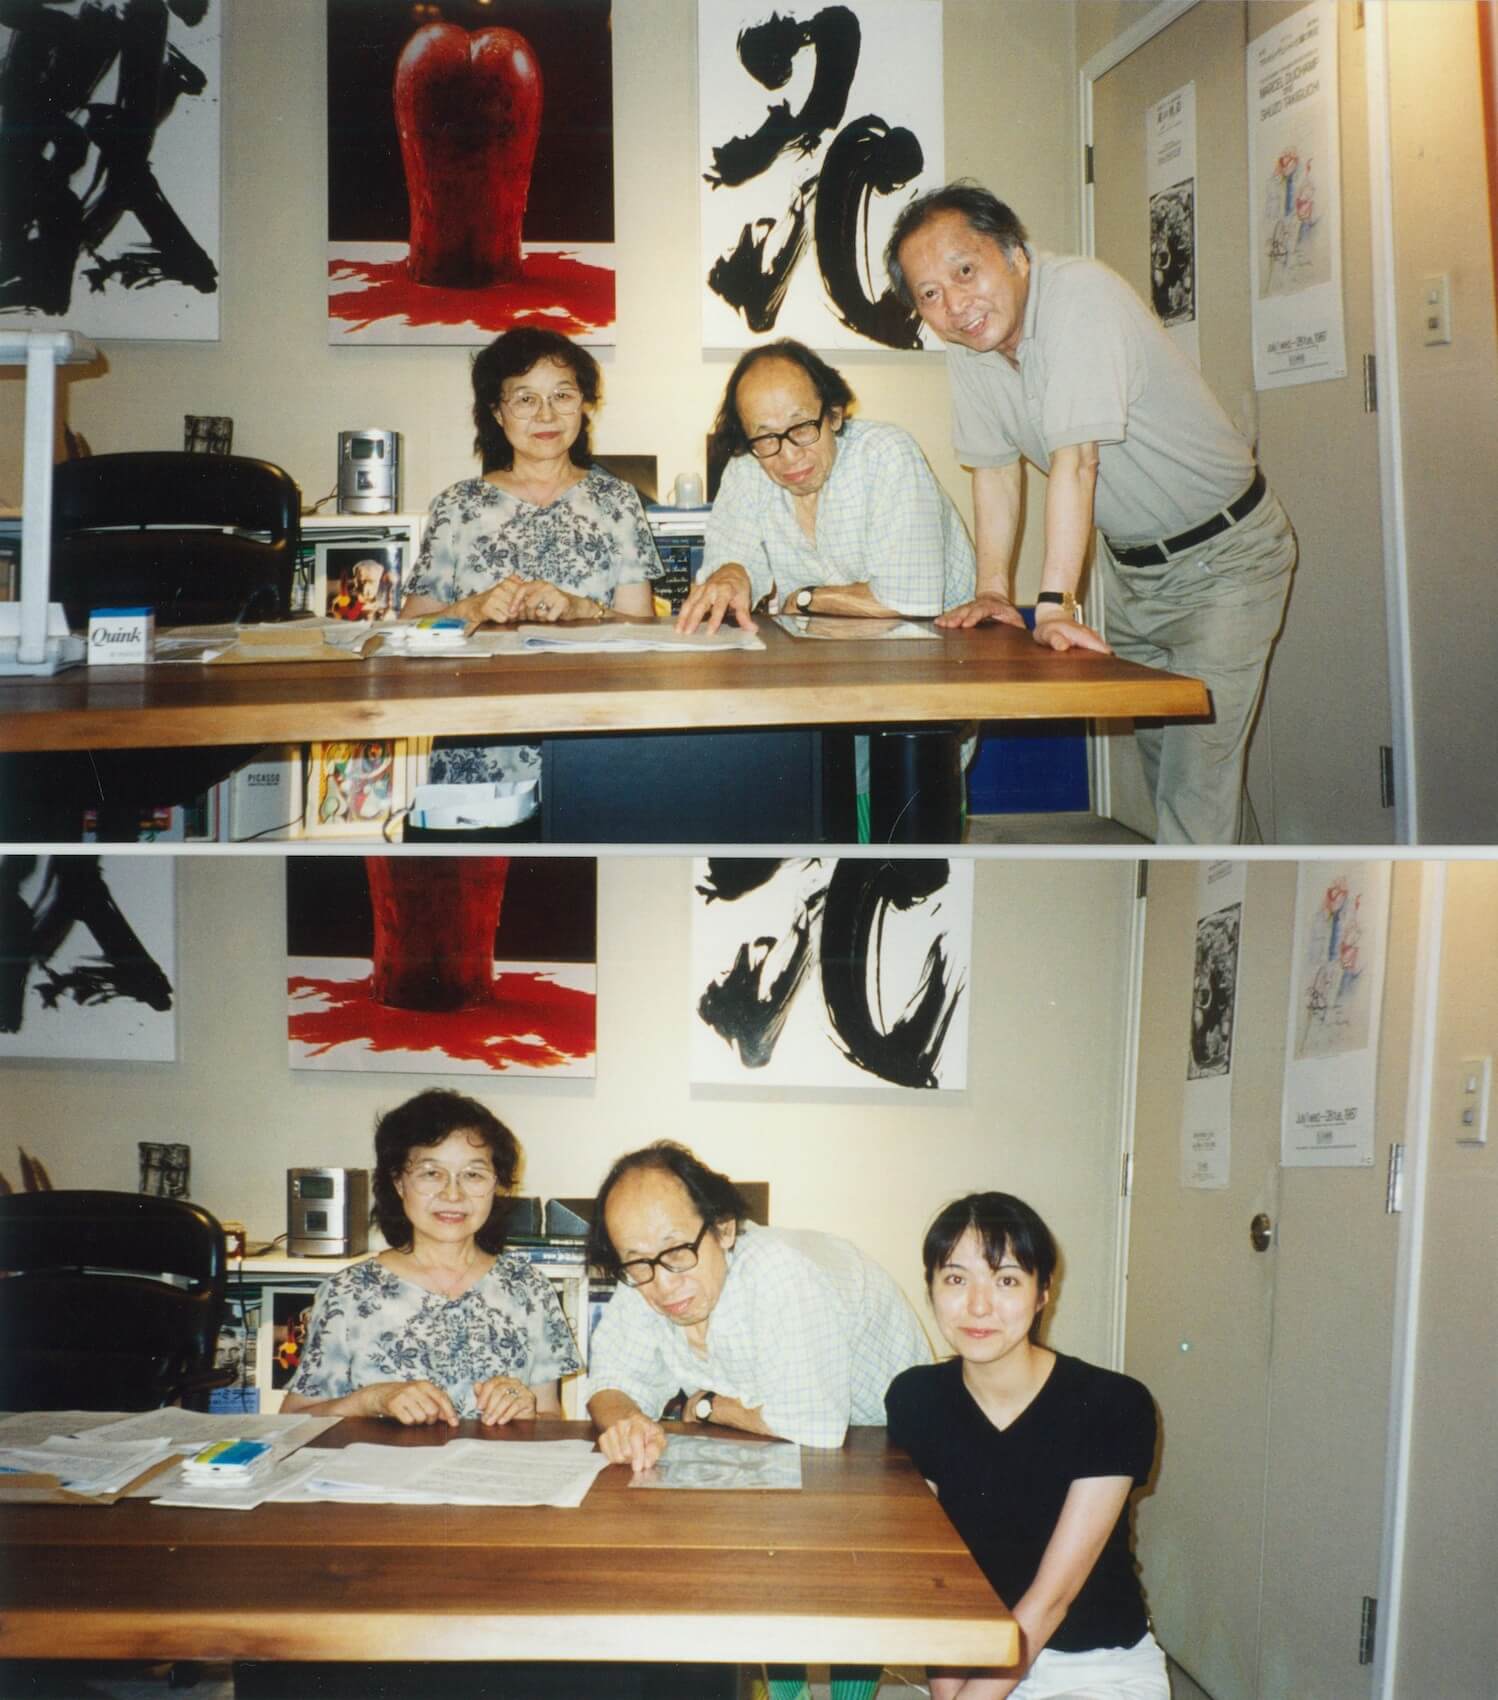 Teiko, Kazuhiko and his staff Megumi Yamada (Gushima) with Yukio Nakagawa in June 2000.